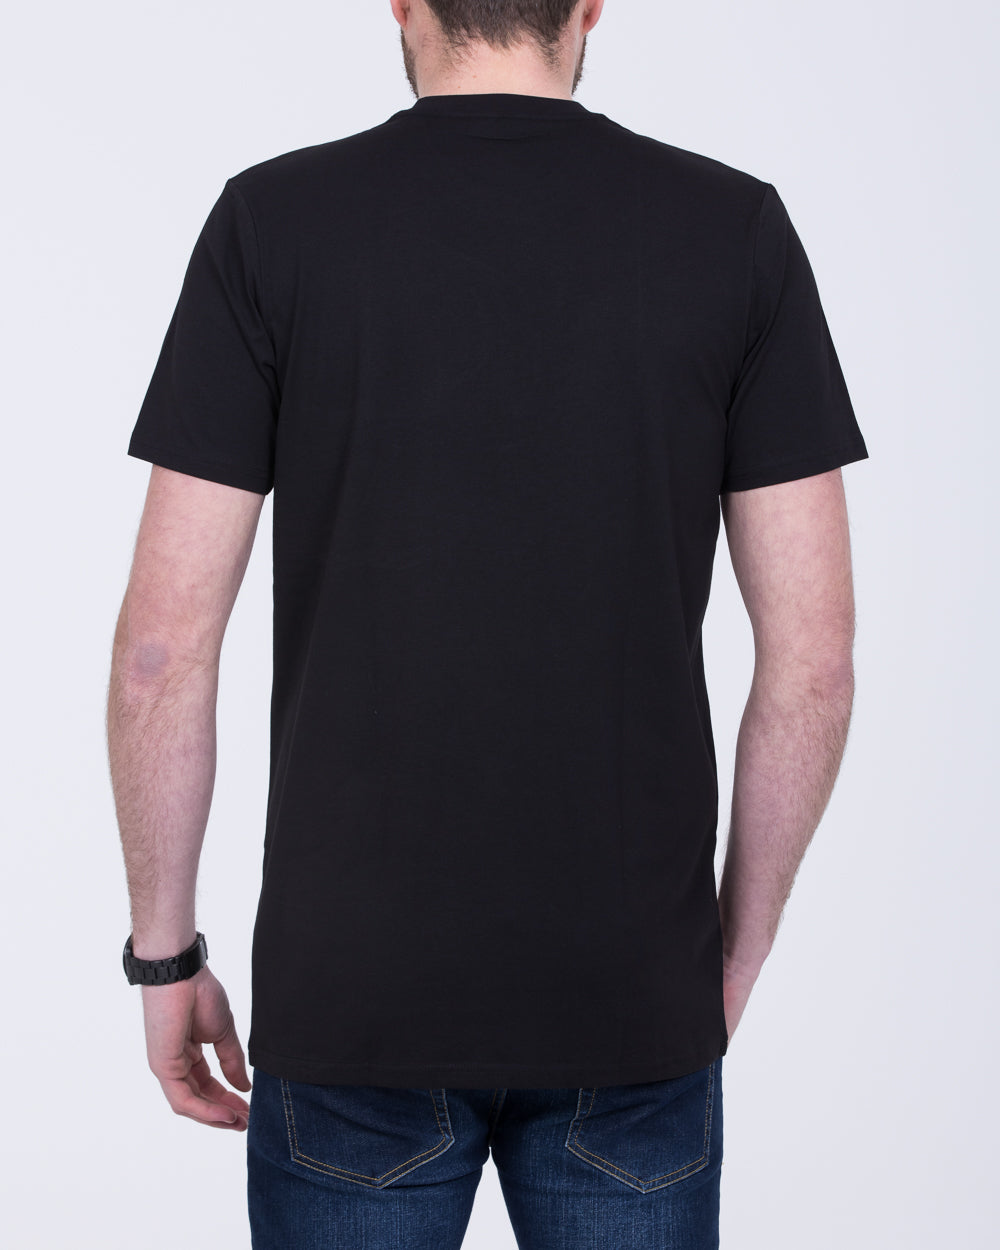 Girav Tall T-Shirt (black) Twin Pack